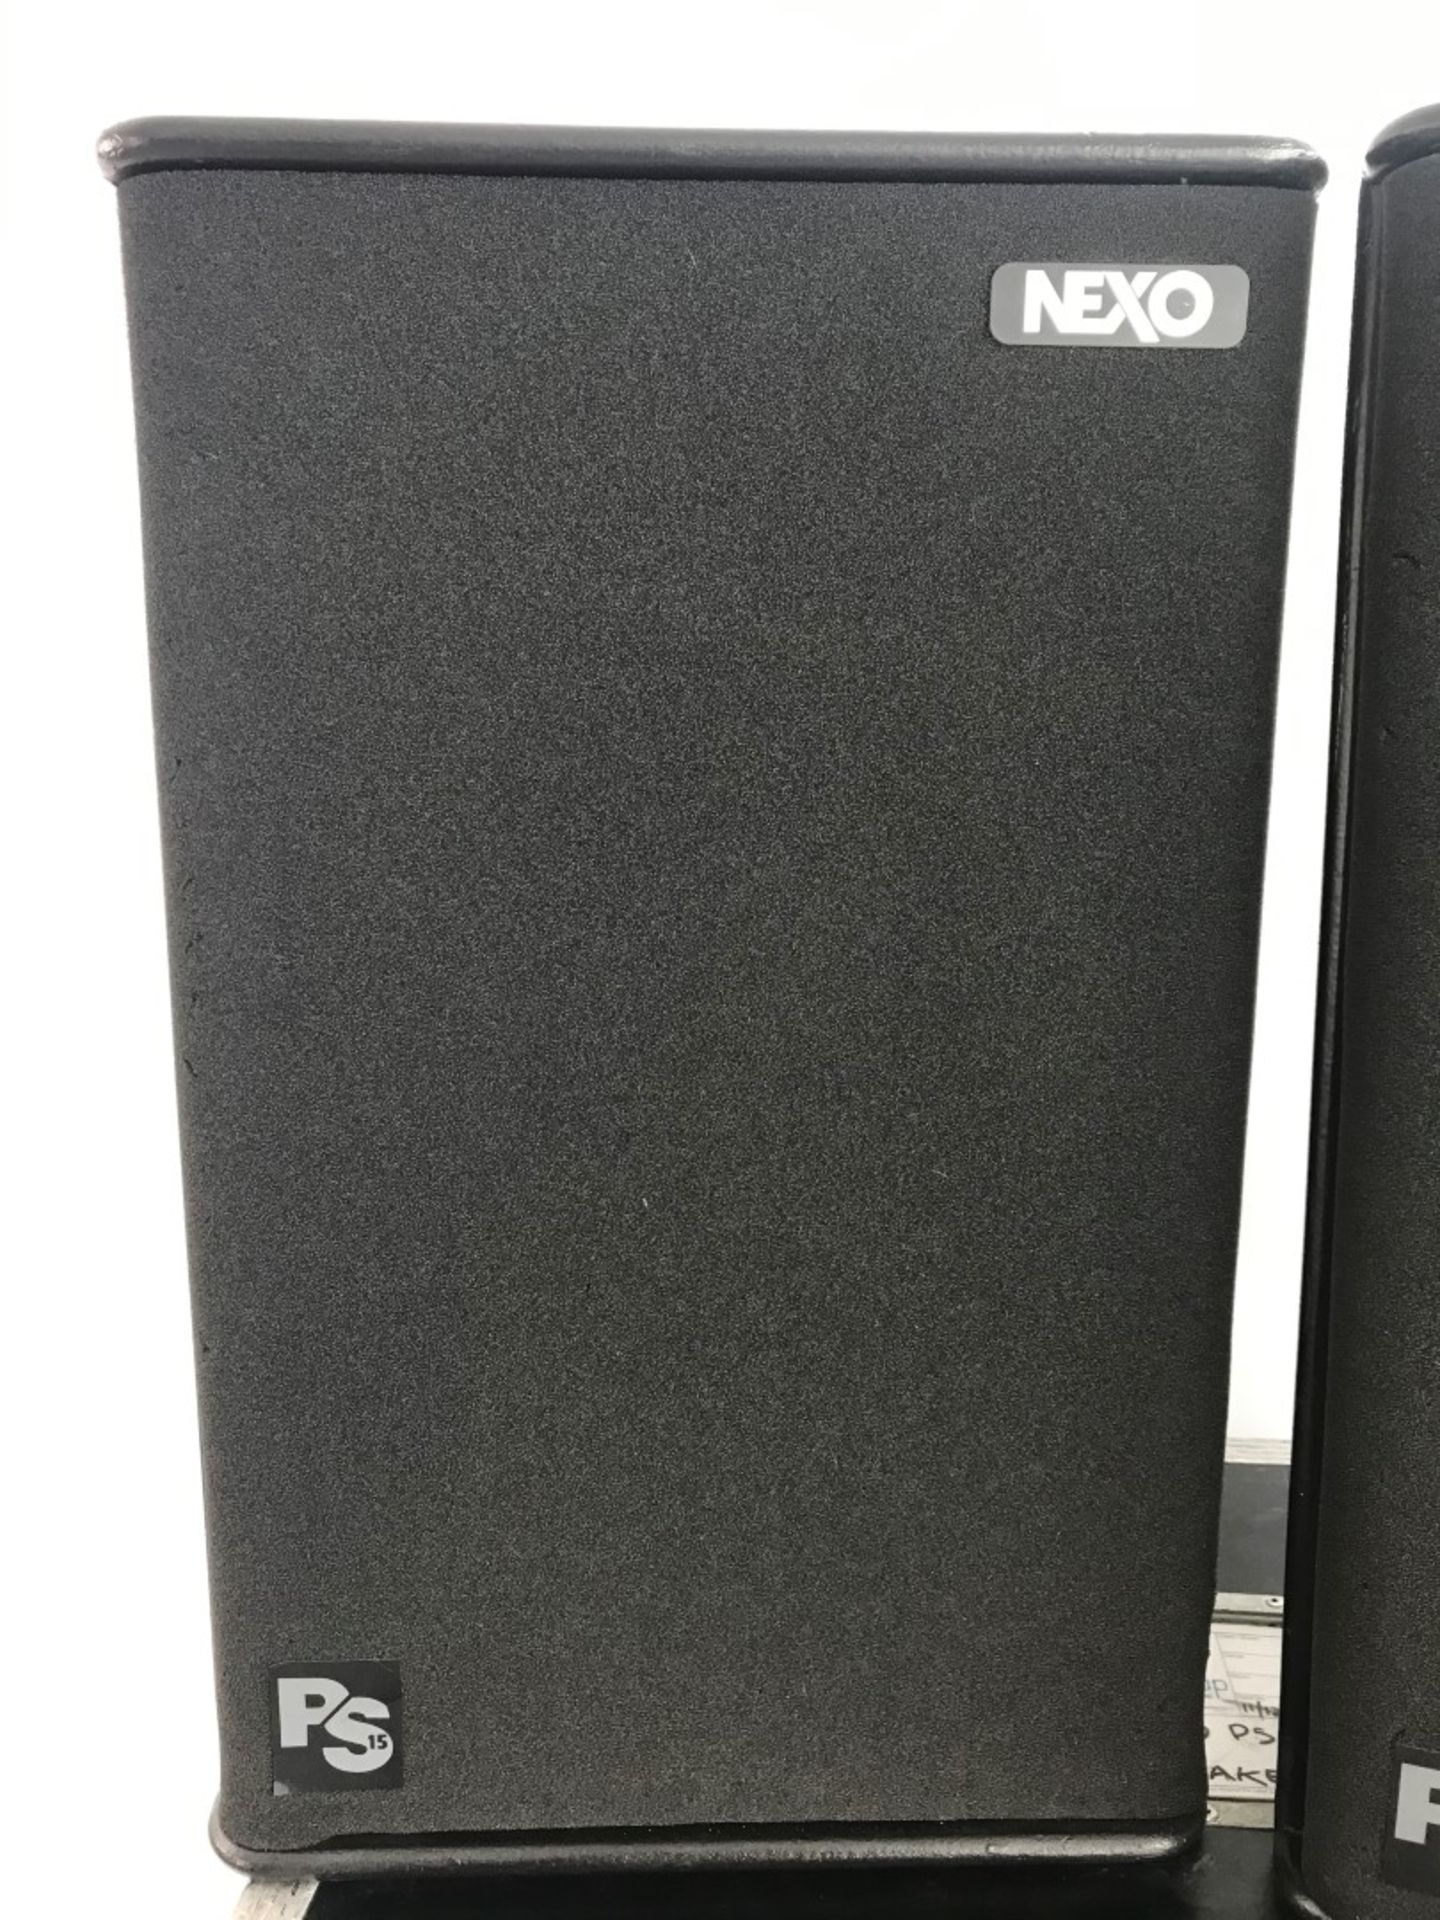 2 x Nexo PS15 Speakers In Dual Flight Case - Ref: 109 - CL581 - Location: Altrincham - Image 2 of 2